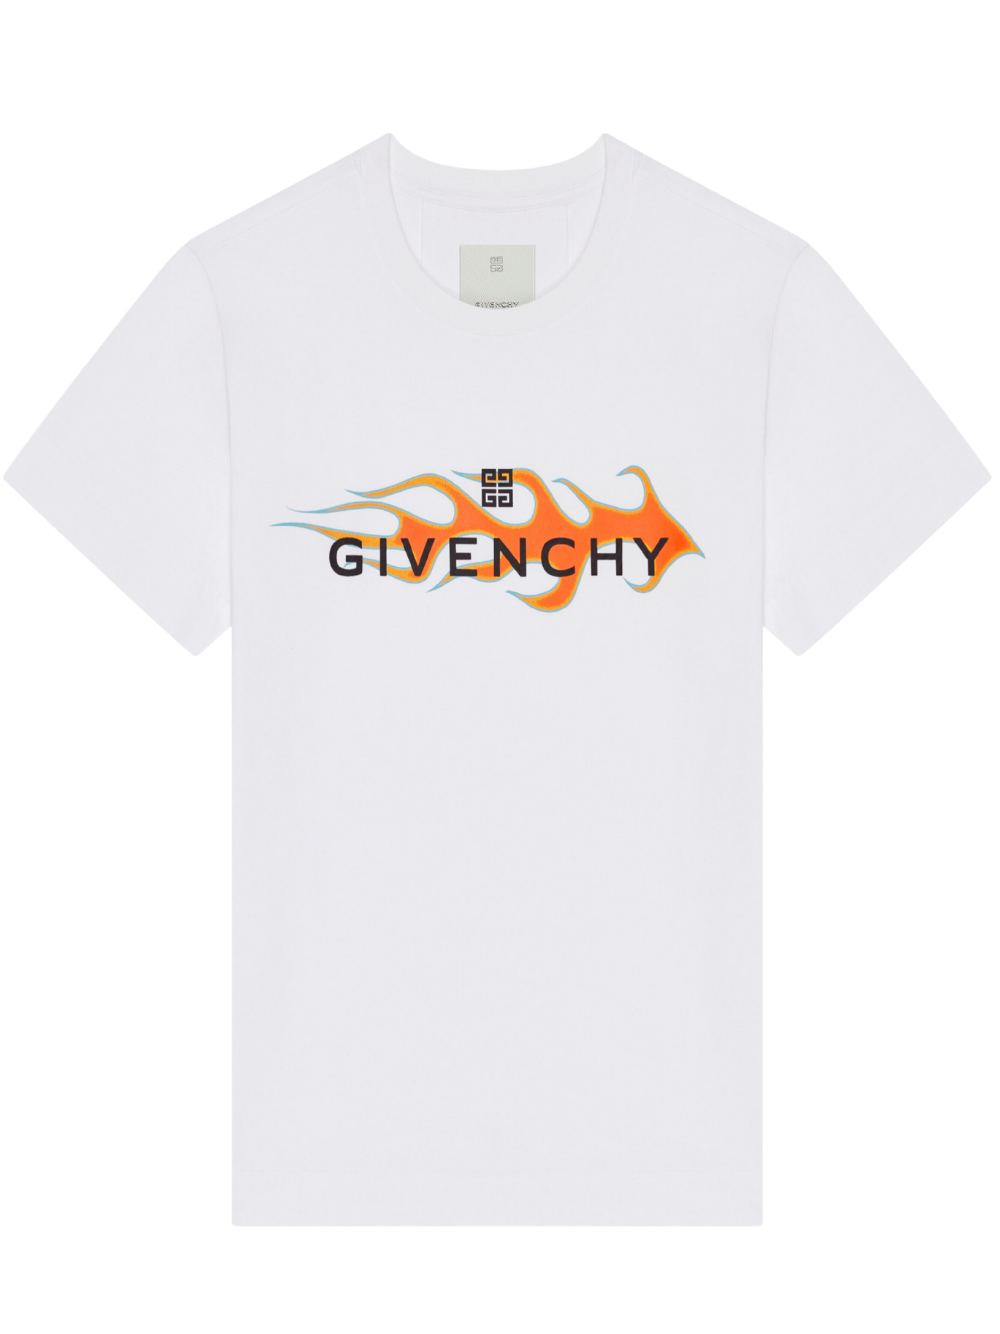 Givenchy flames t-shirt white and orange BM716G3YGE-100